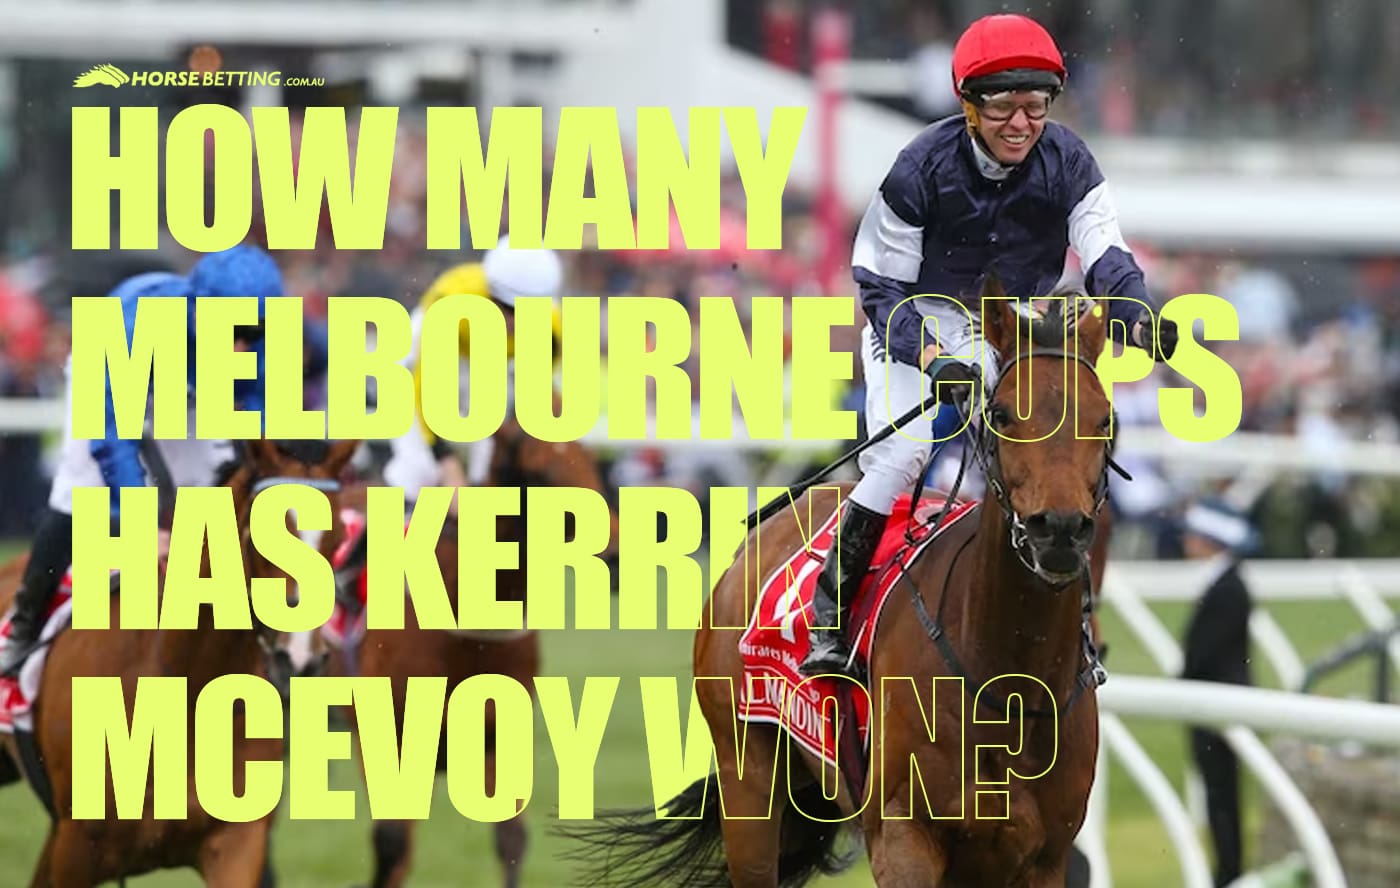 Melbourne Cup jockey Kerrin McEvoy